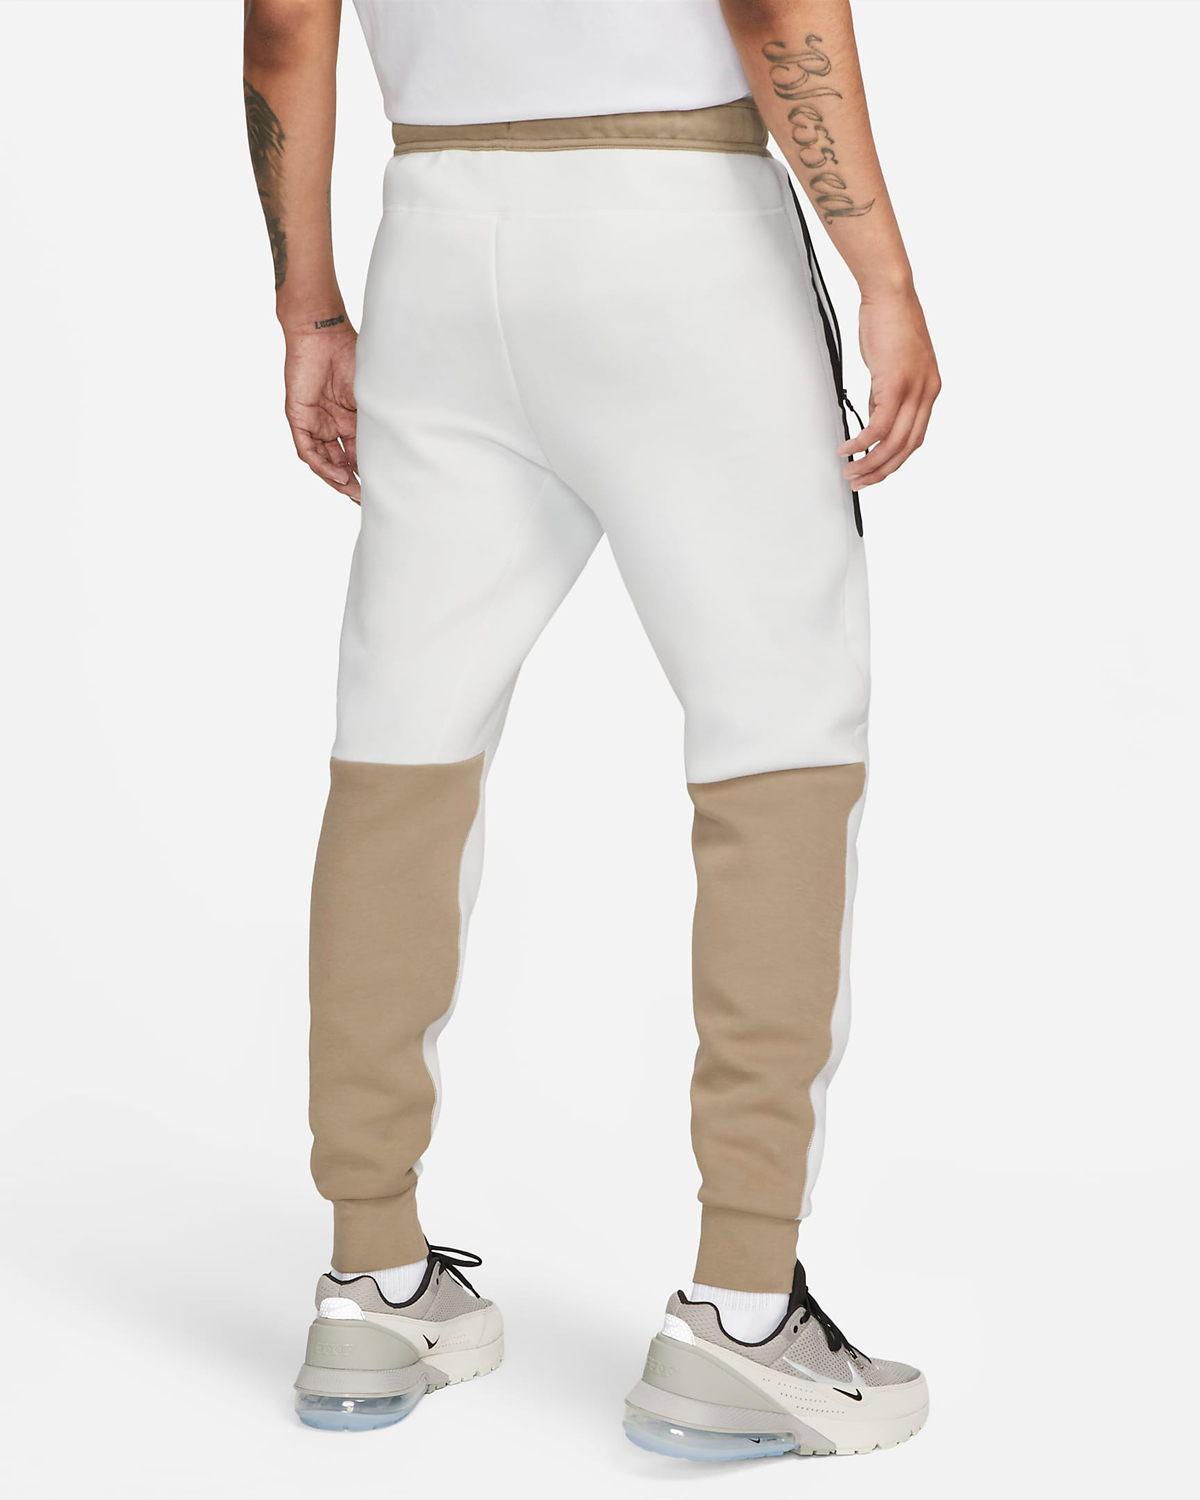 Nike-Tech-Fleece-Joggers-Khaki-White